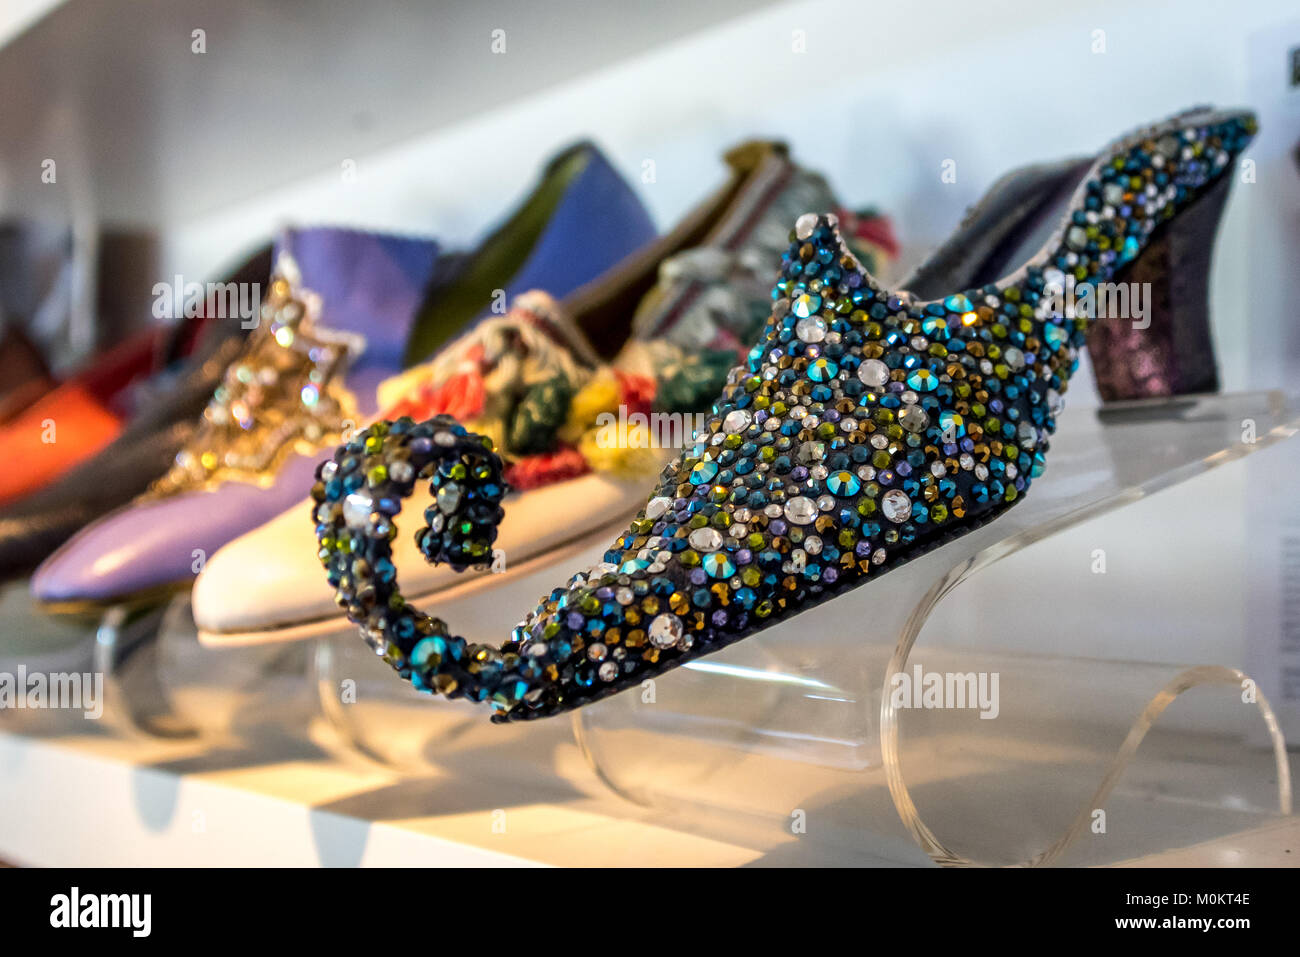 Bejeweled and elegant shoe design by artisan shoemaker Debra Hovel of Debra Hovel Footwear; just one example of the wide range of her custom styles. Stock Photo